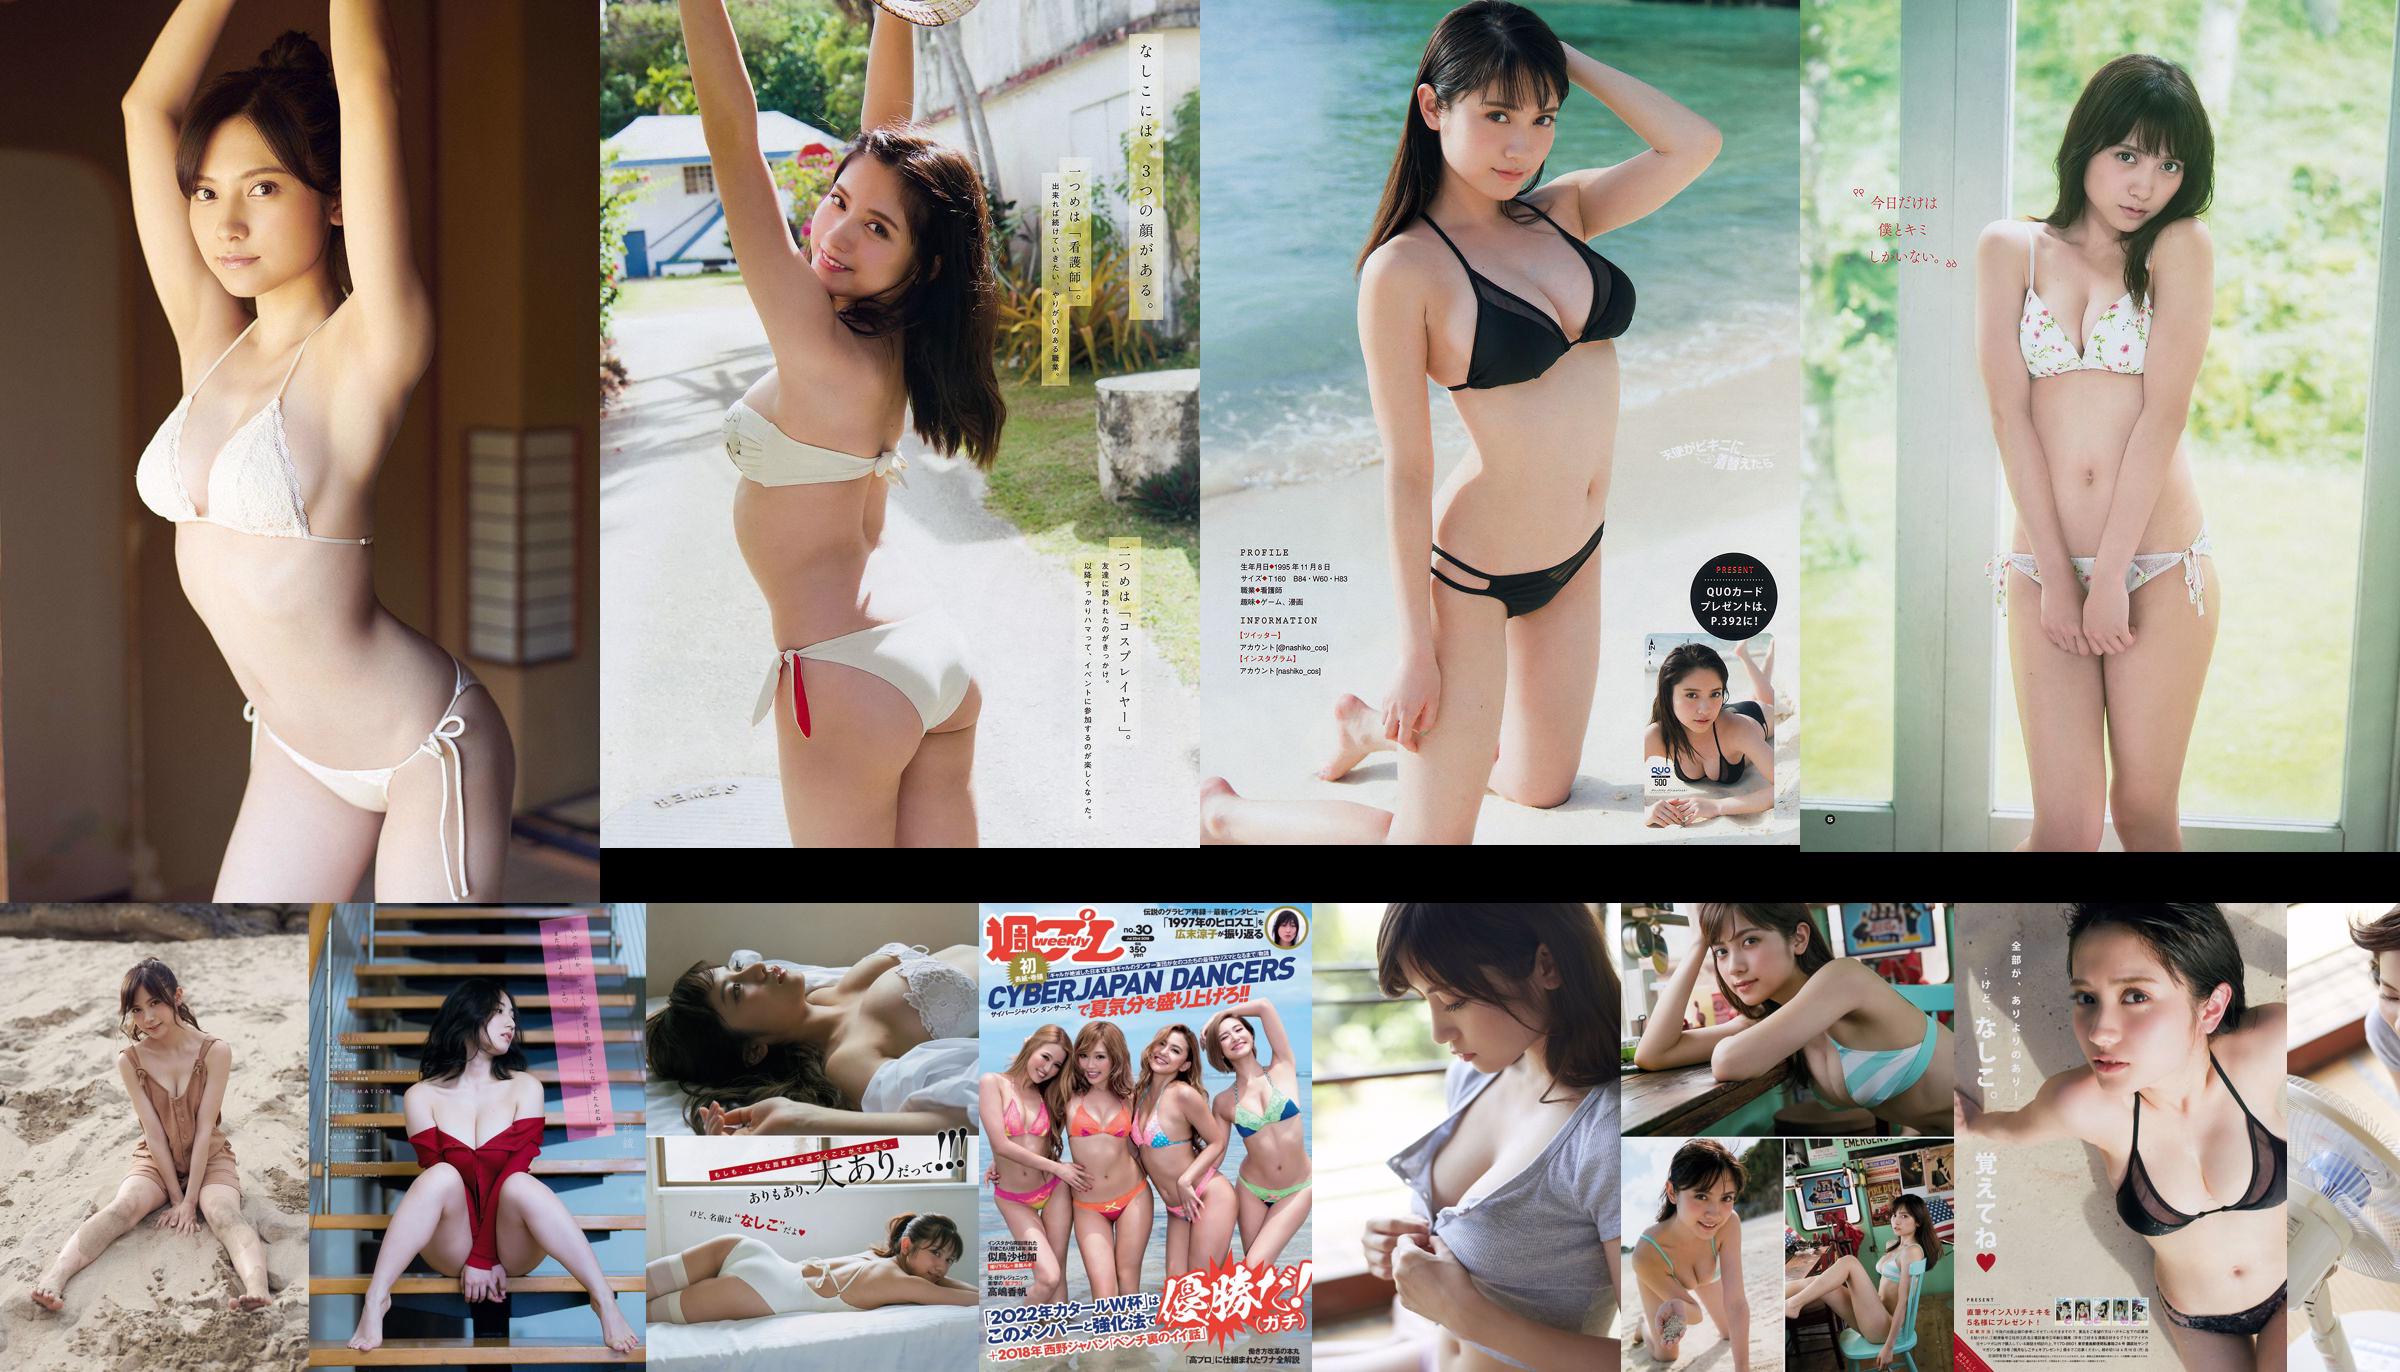 [Revista joven] Nashiko Momotsuki Saaya 2018 No 39 Foto No.9442d6 Página 4